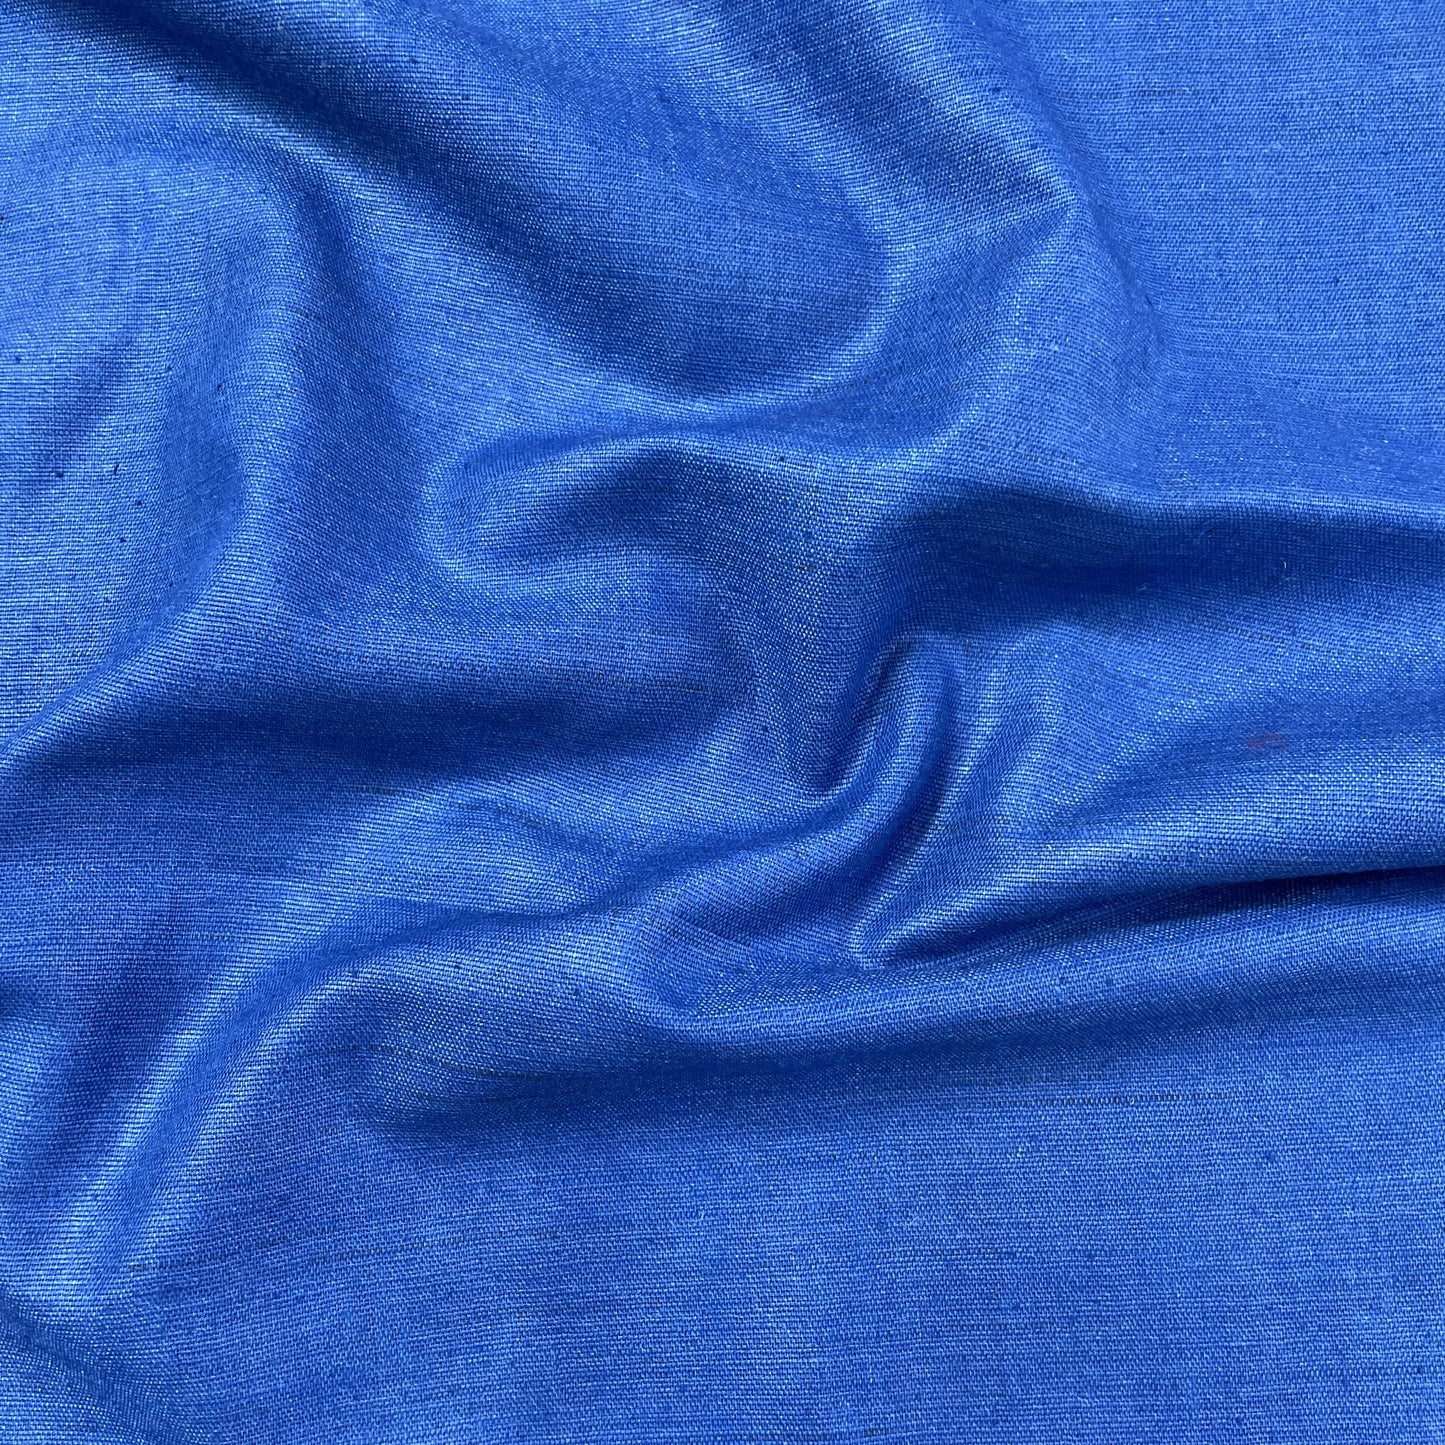 Navy Blue Solid Cotton Khadi Fabric